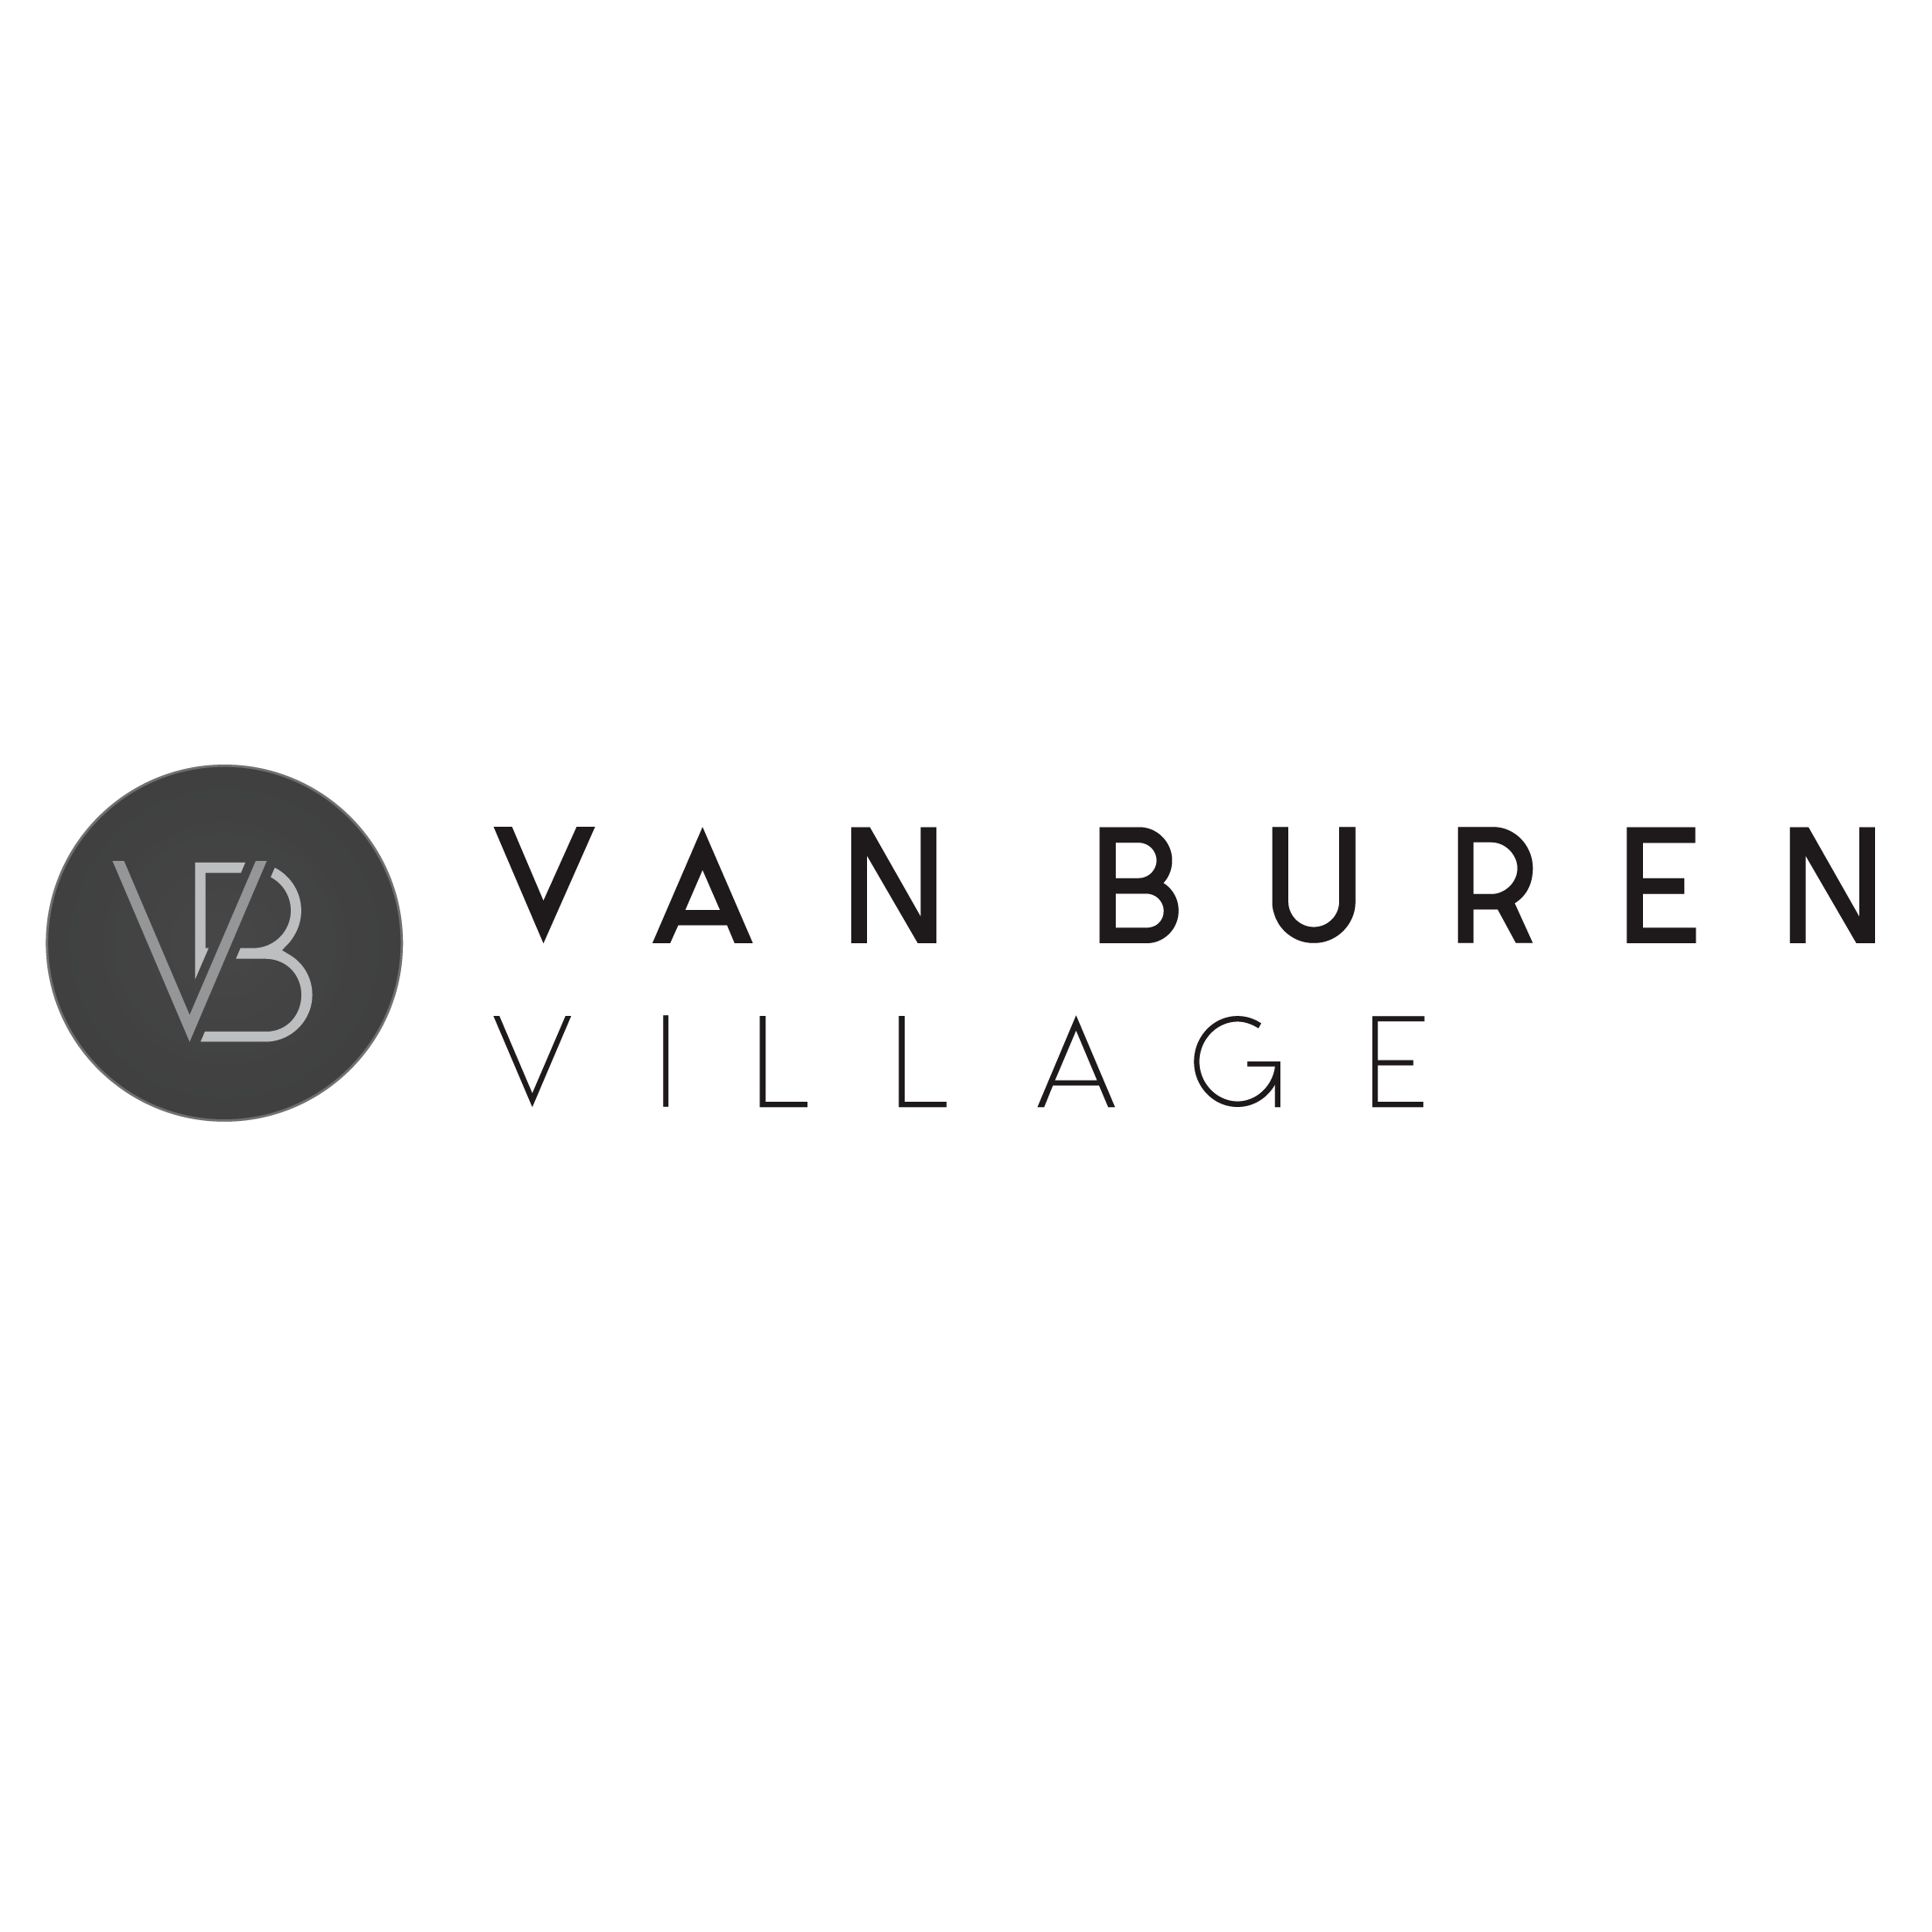 Van Buren Village - Kettering, OH 45420 - (937)735-0059 | ShowMeLocal.com